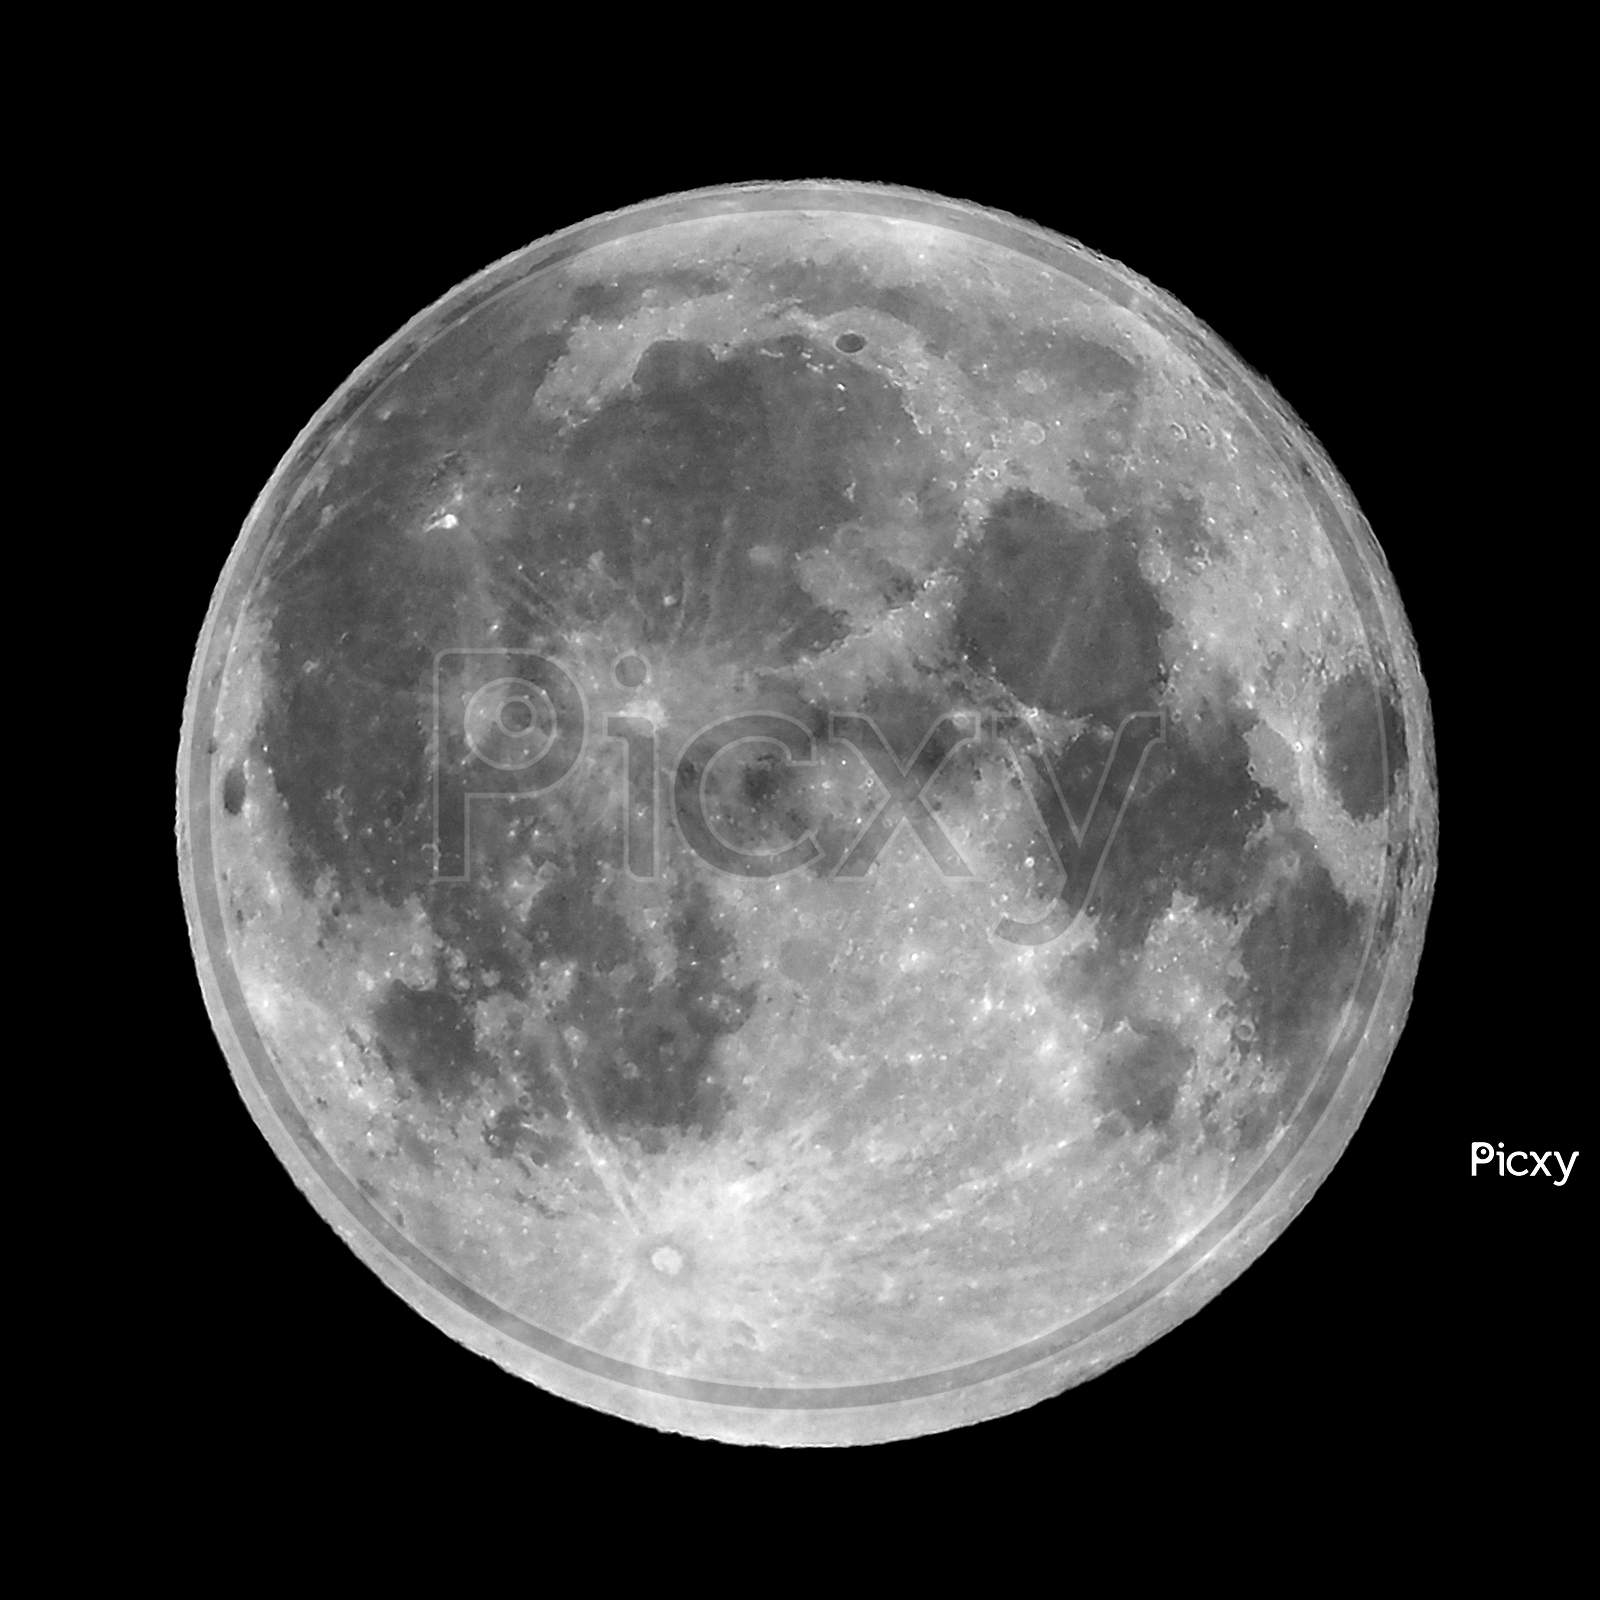 Full Moon Seen With Telescope